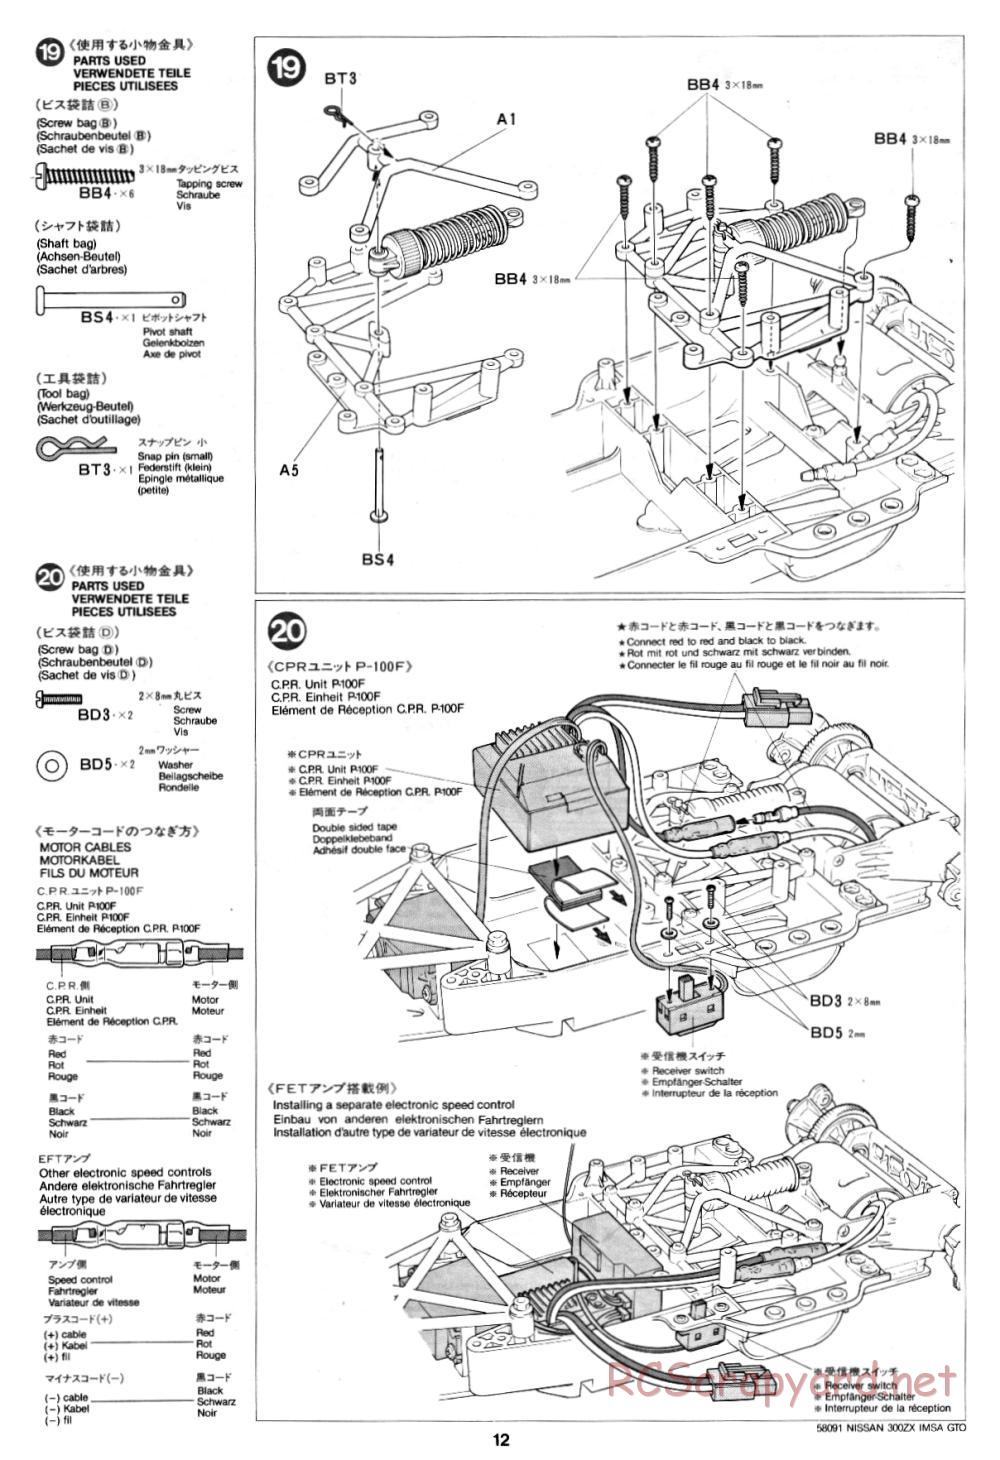 Tamiya - Nissan 300ZX IMSA GTO - 58091 - Manual - Page 12